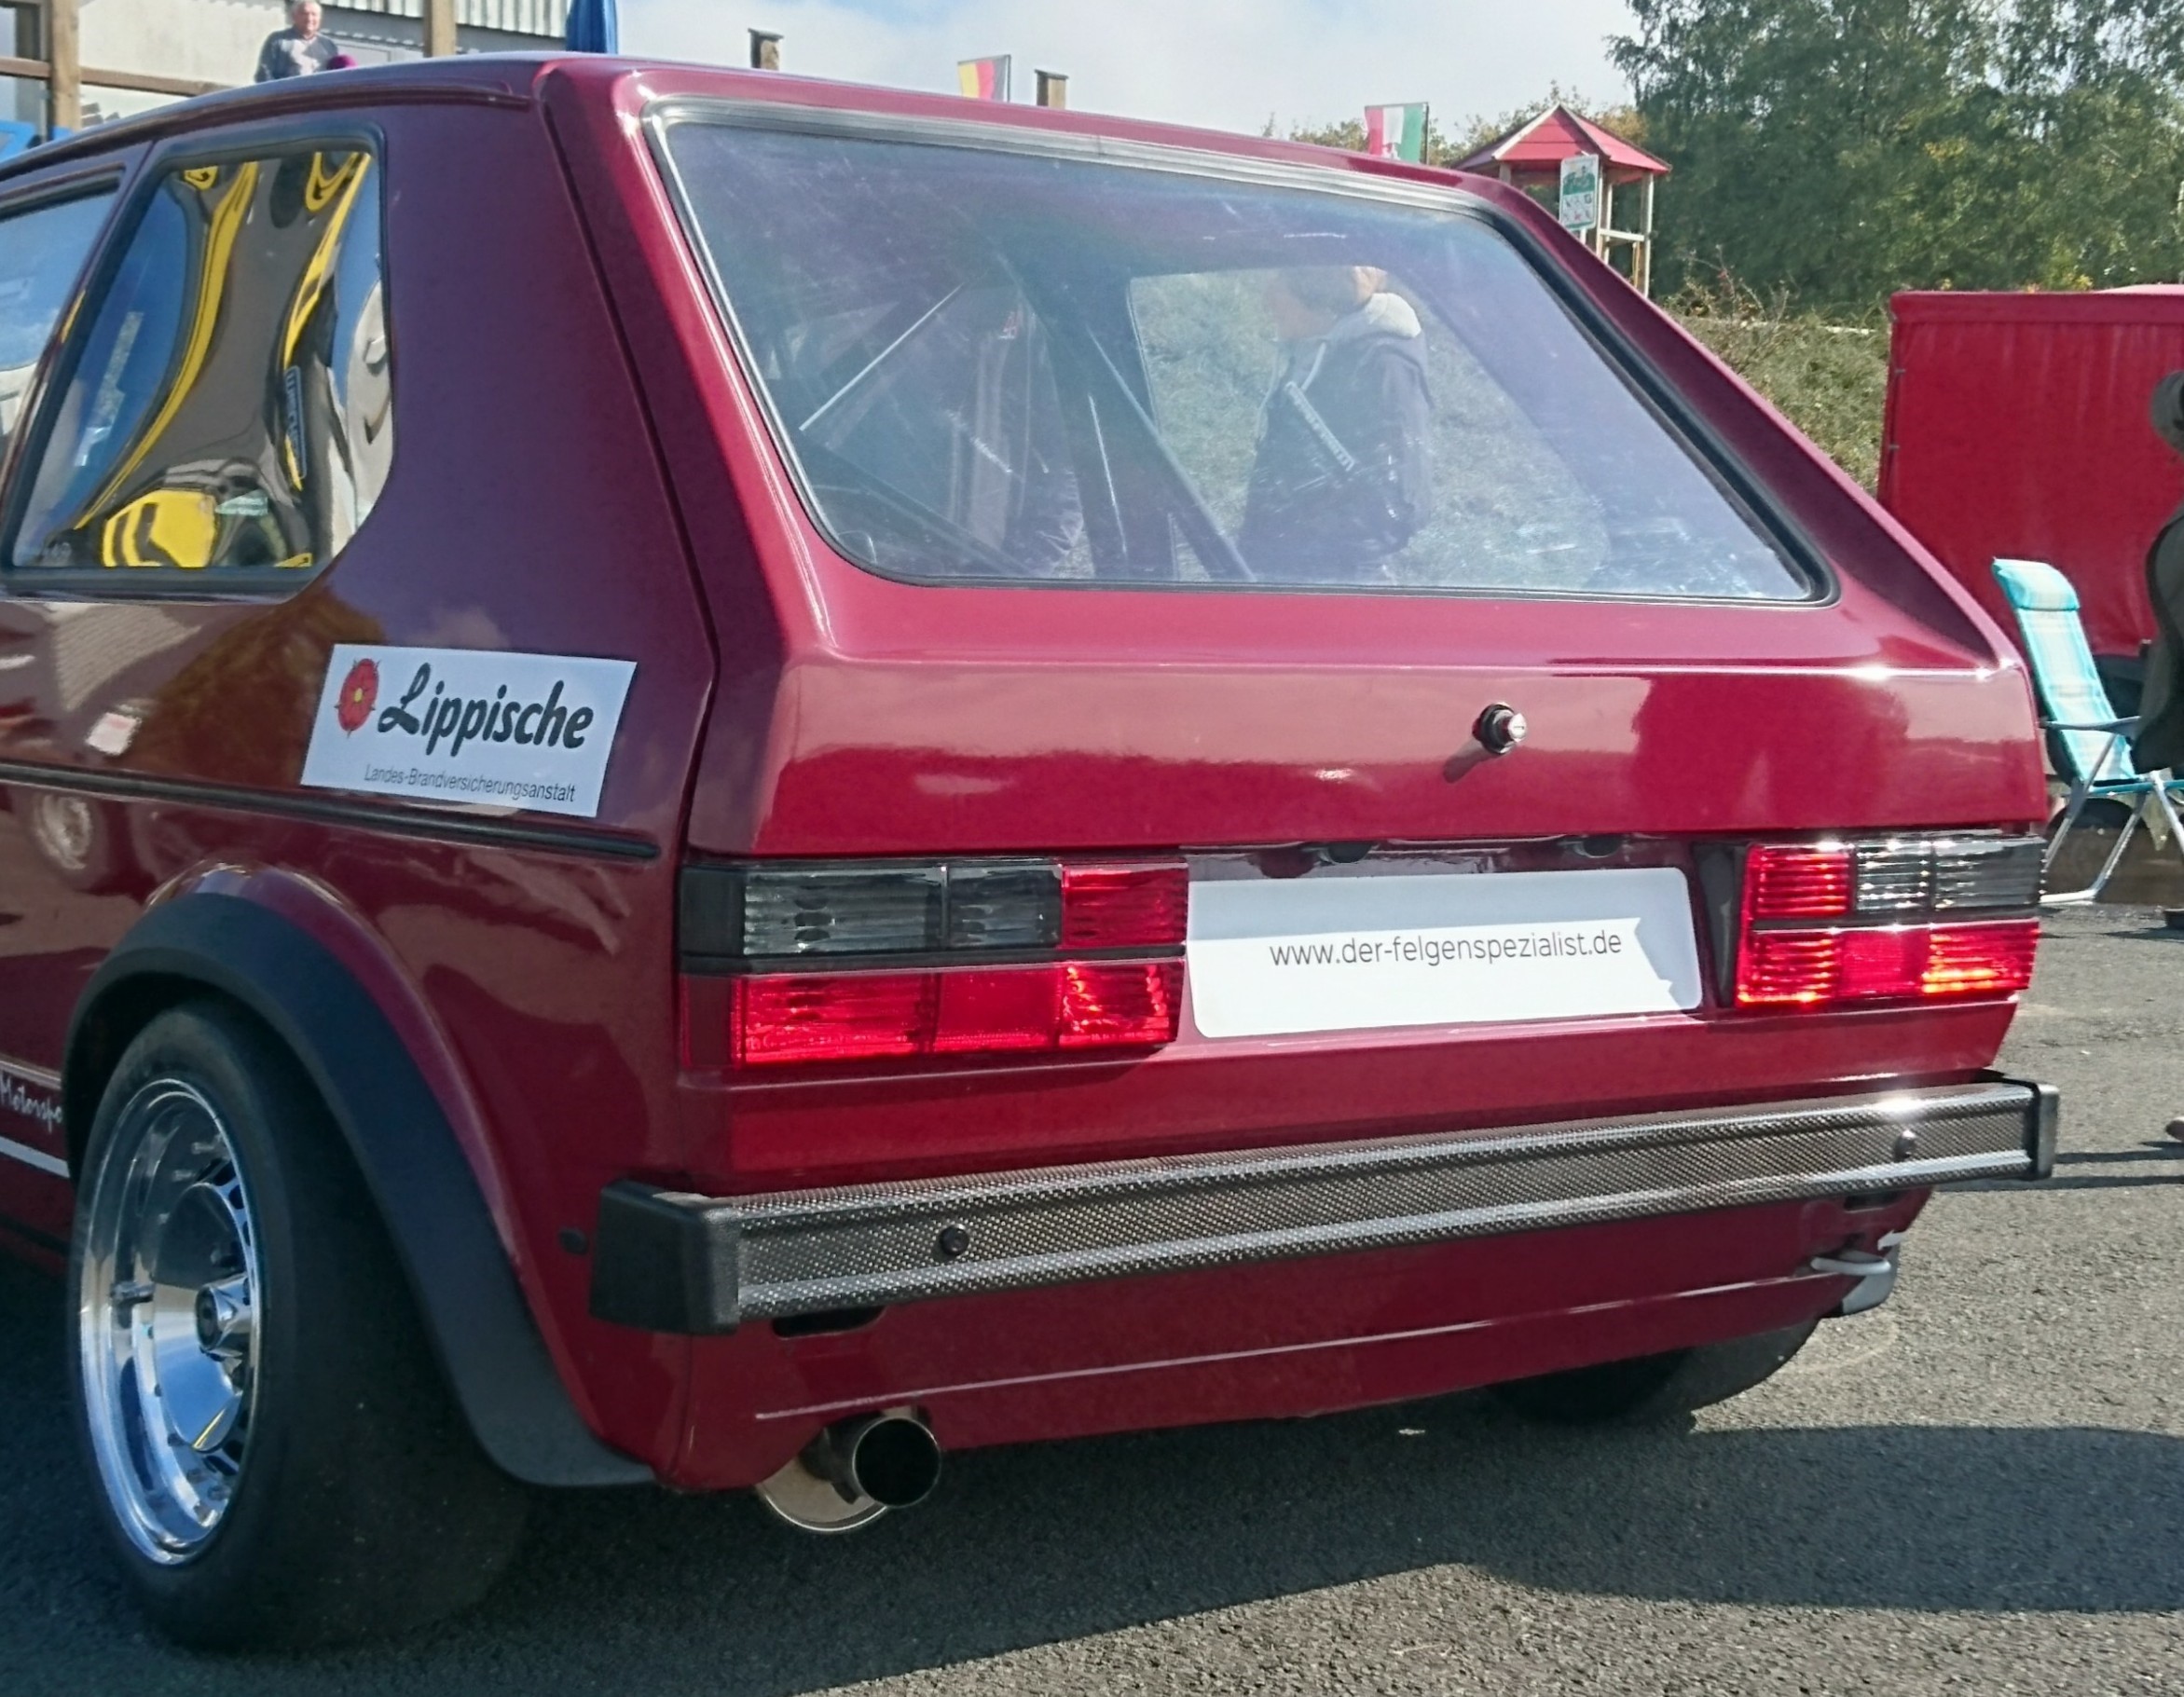 VW Golf 1 Slaom-Racer mit Schmidt TH-Line in 8x13.
Made by Der-Felgenspezialist